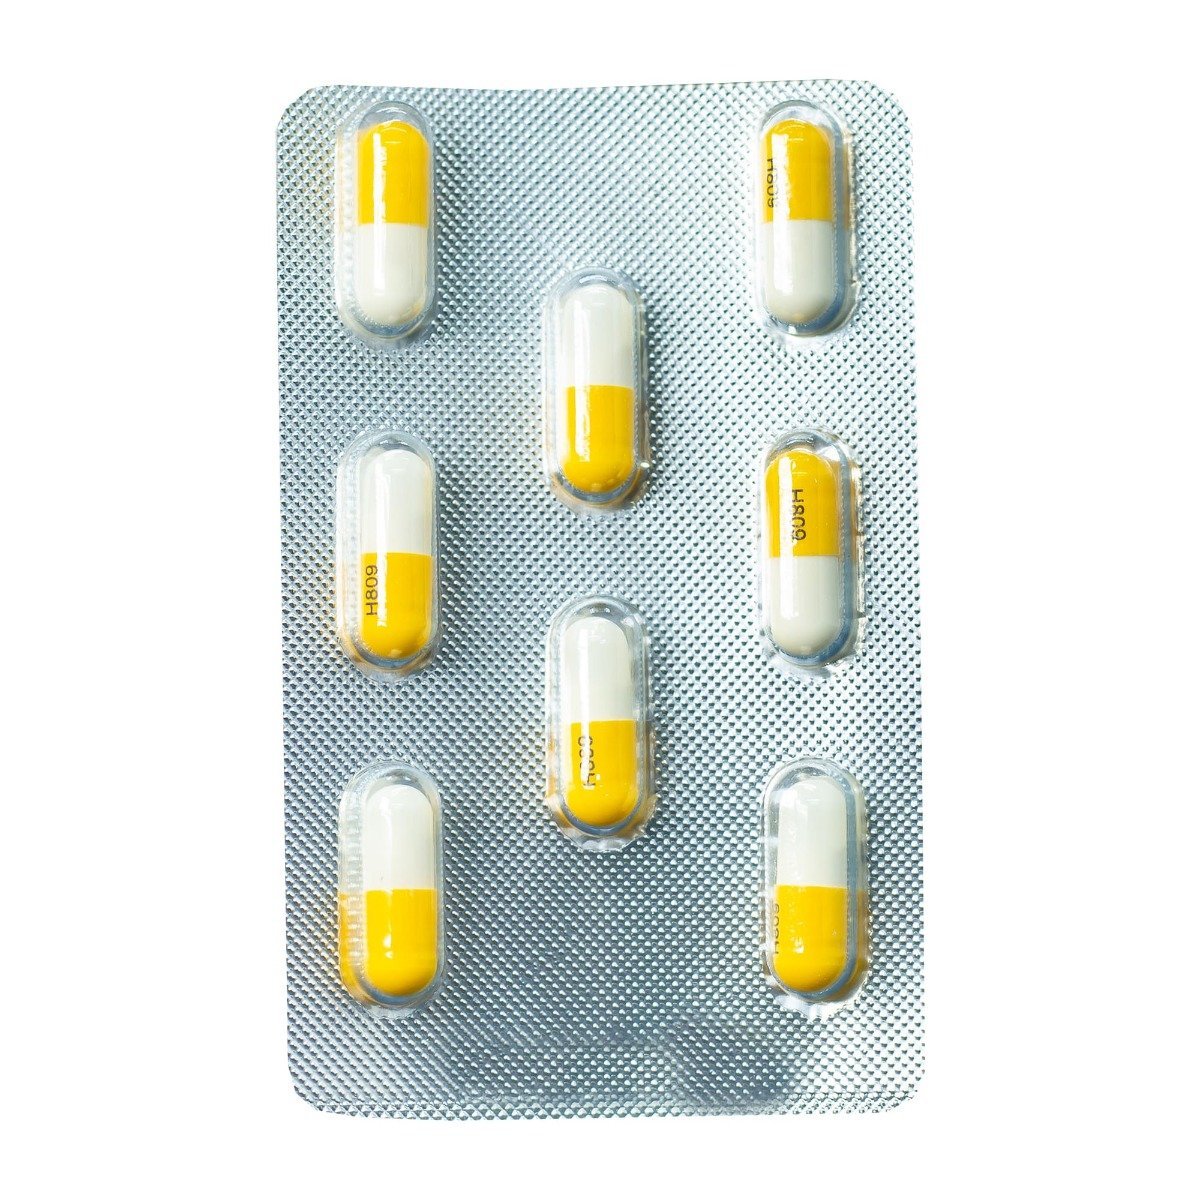 Suprax 200 mg - 8 Capsules - Bloom Pharmacy